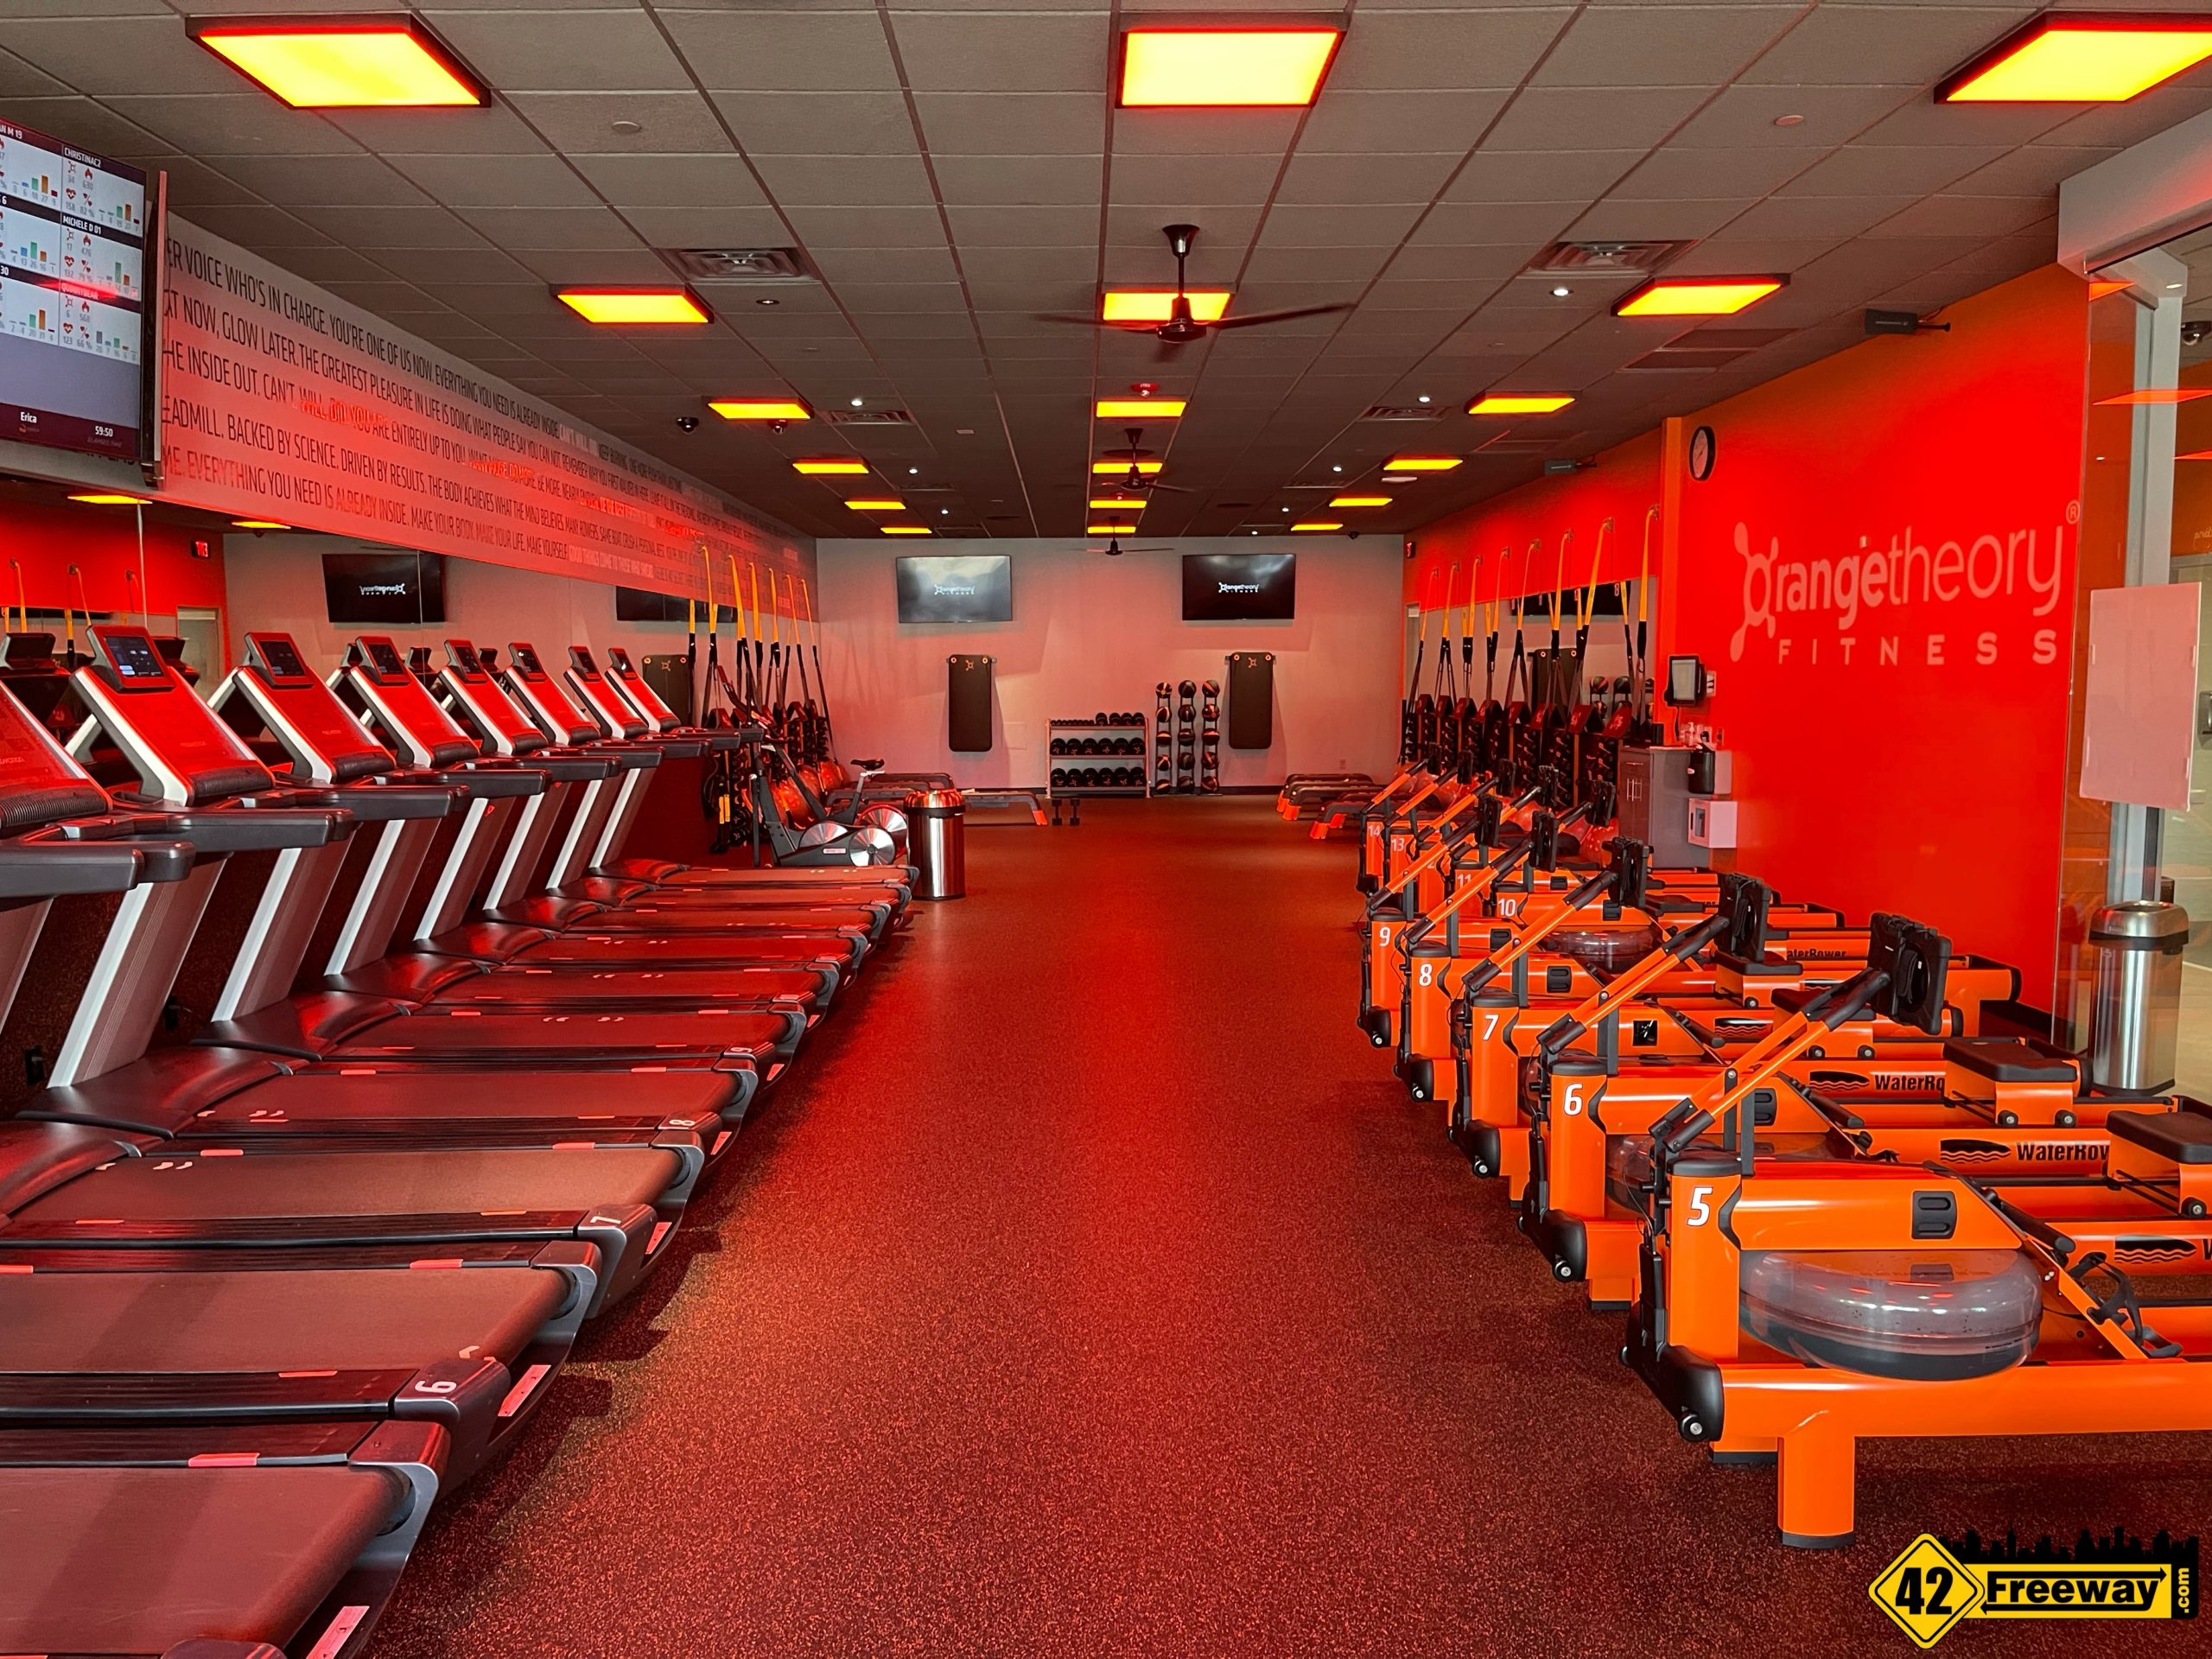 Orangetheory Fitness Studio is Open In Deptford (and Washington Township) -  42 Freeway